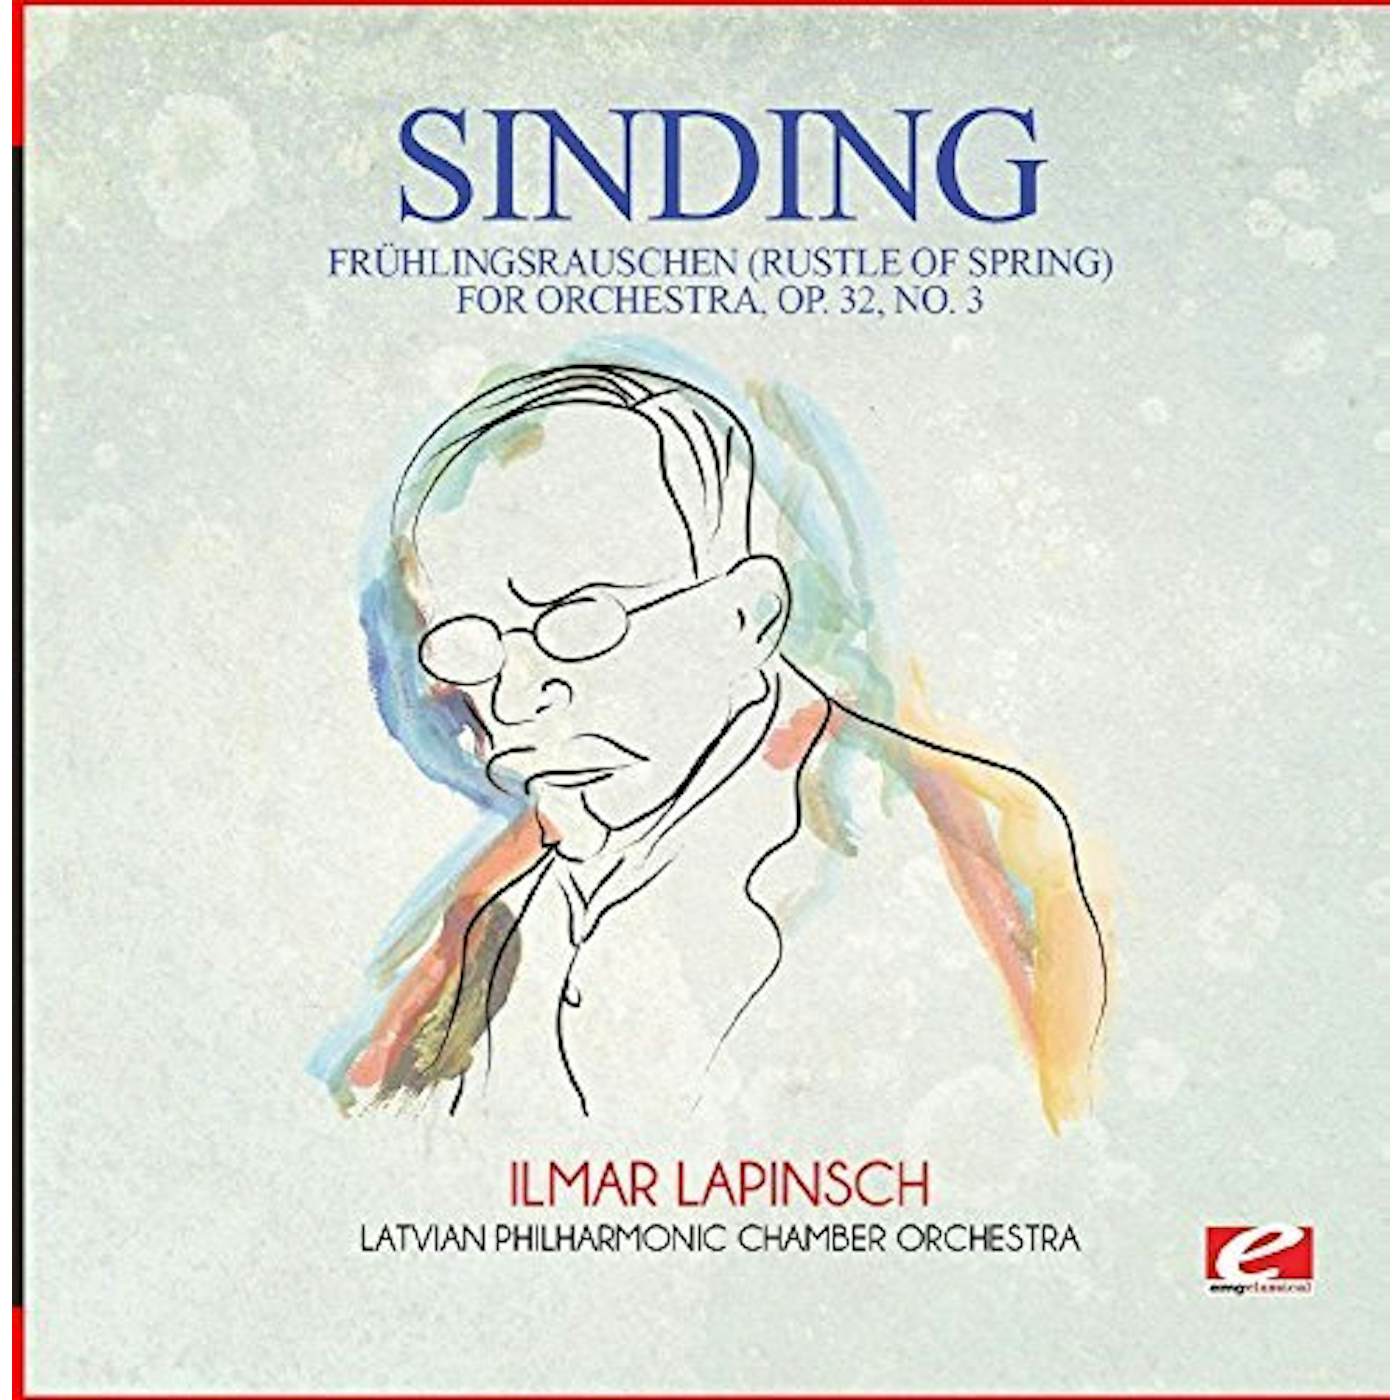 Sinding FRUHLINGSRAUSCHEN (RUSTLE OF SPRING) FOR ORCHESTRA CD